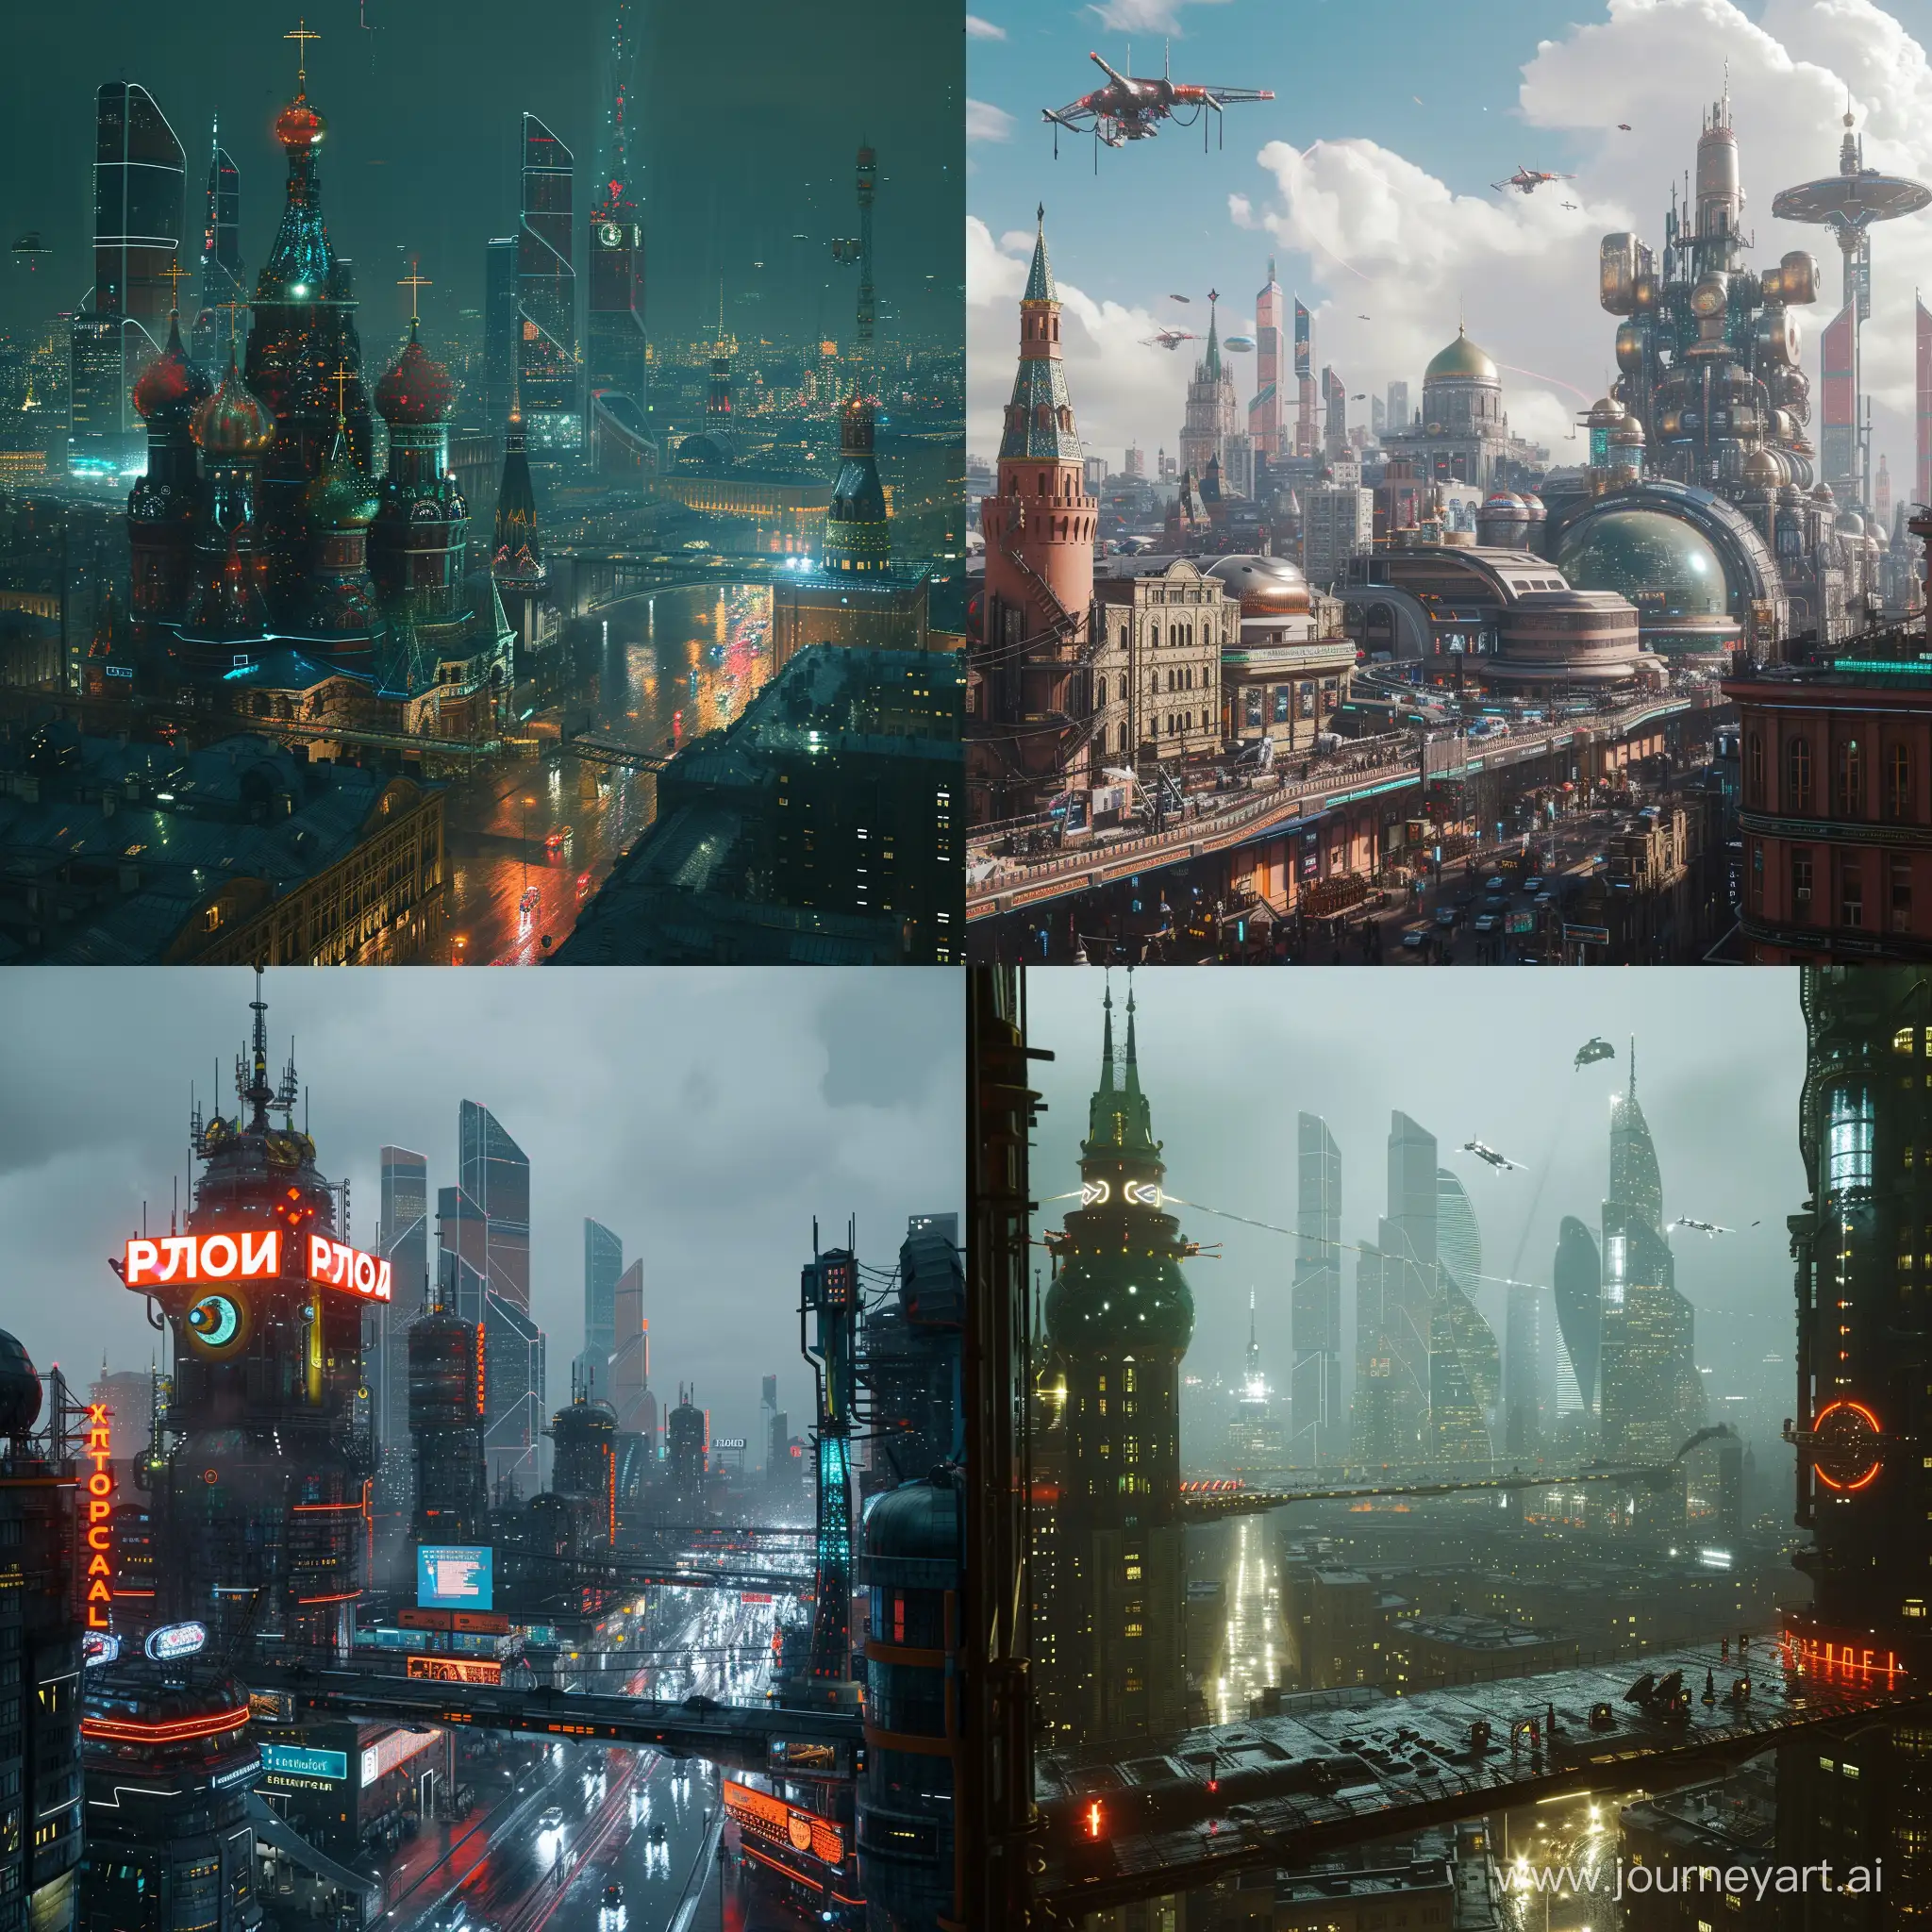 Dystopian-Postcyberpunk-Scene-Futuristic-Moscow-Cinematic-Style